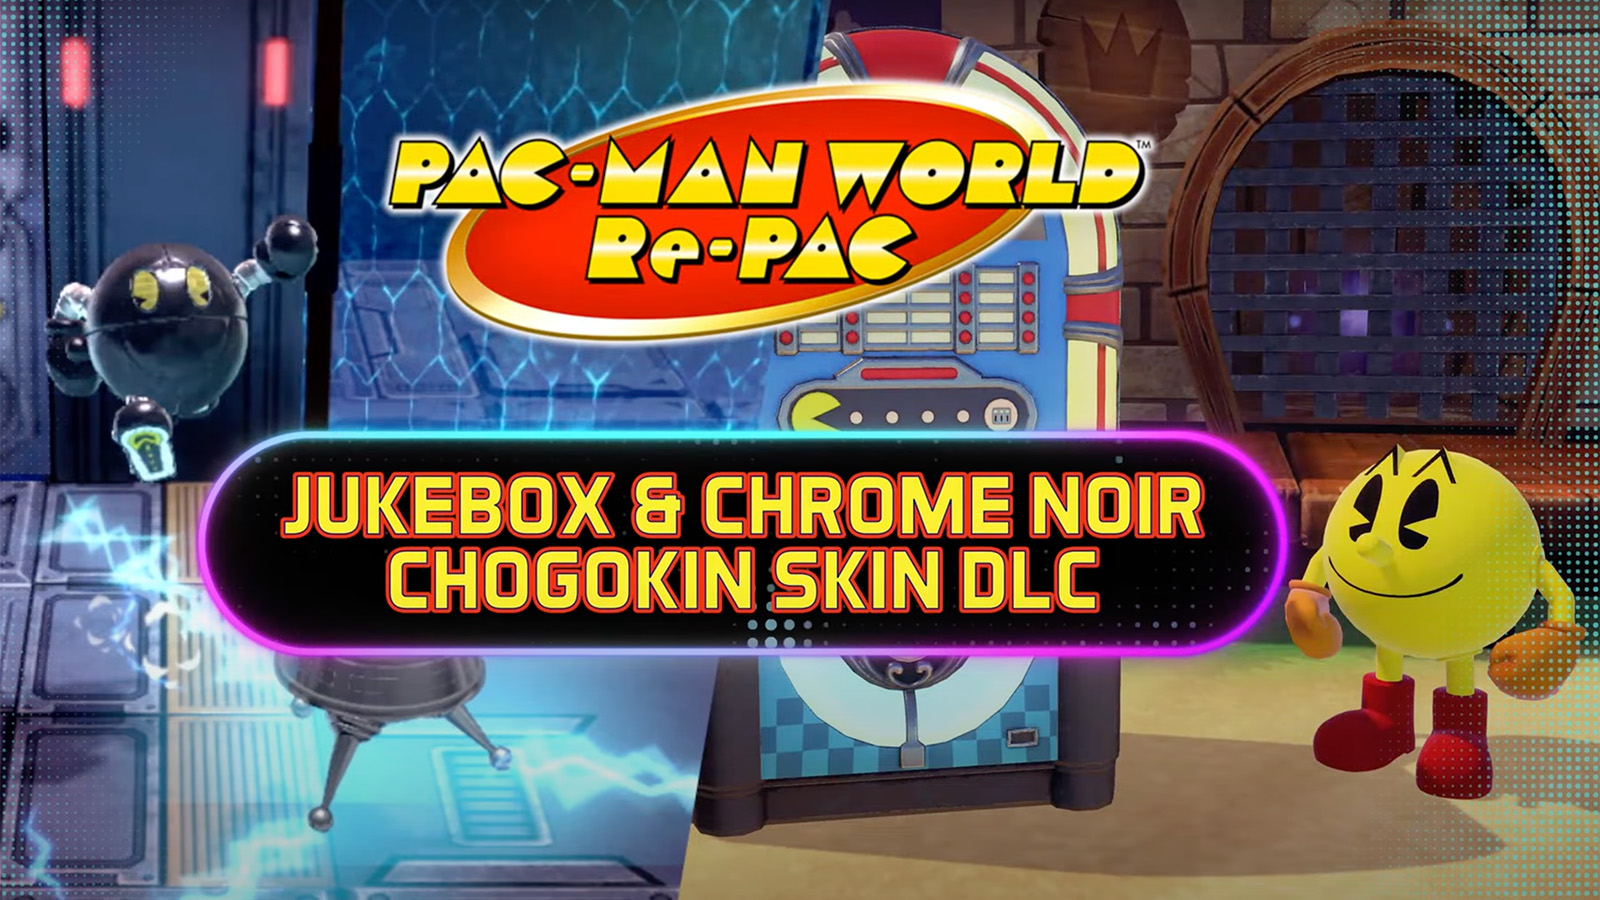 Pac-Man World Re-Pac DLCs